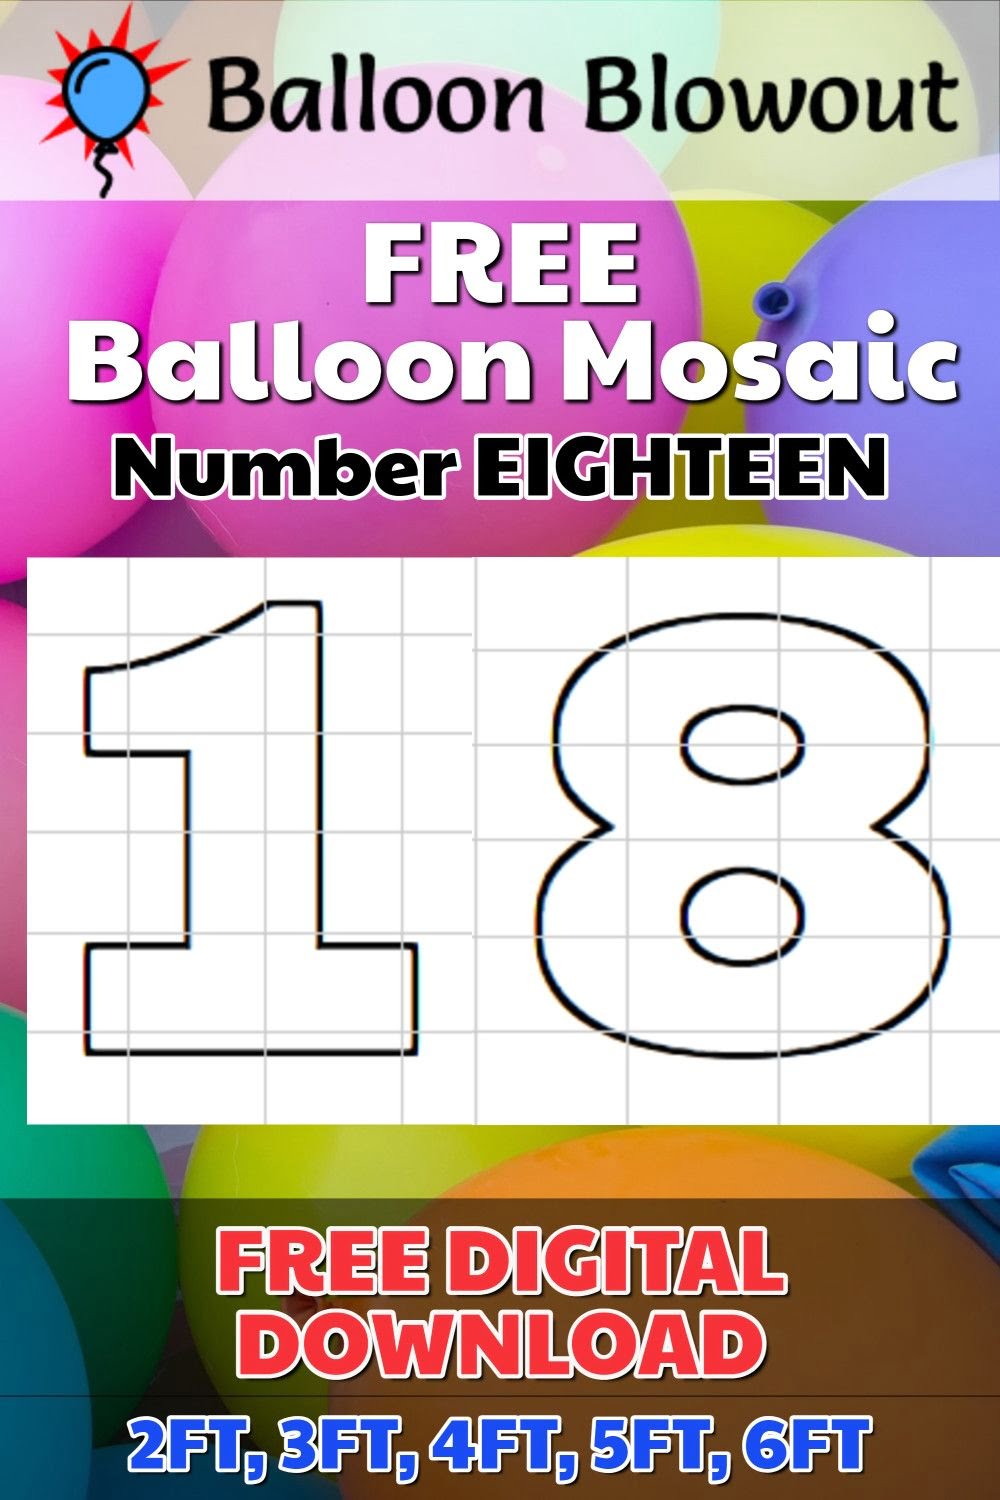 FREE Balloon Mosaic Number18 EIGHTEEN Template Frame Kit PDF Large Printable DIY 2ft 3ft 4ft 5ft 6ft Balloon Template Balloons Free Printable Letter Templates